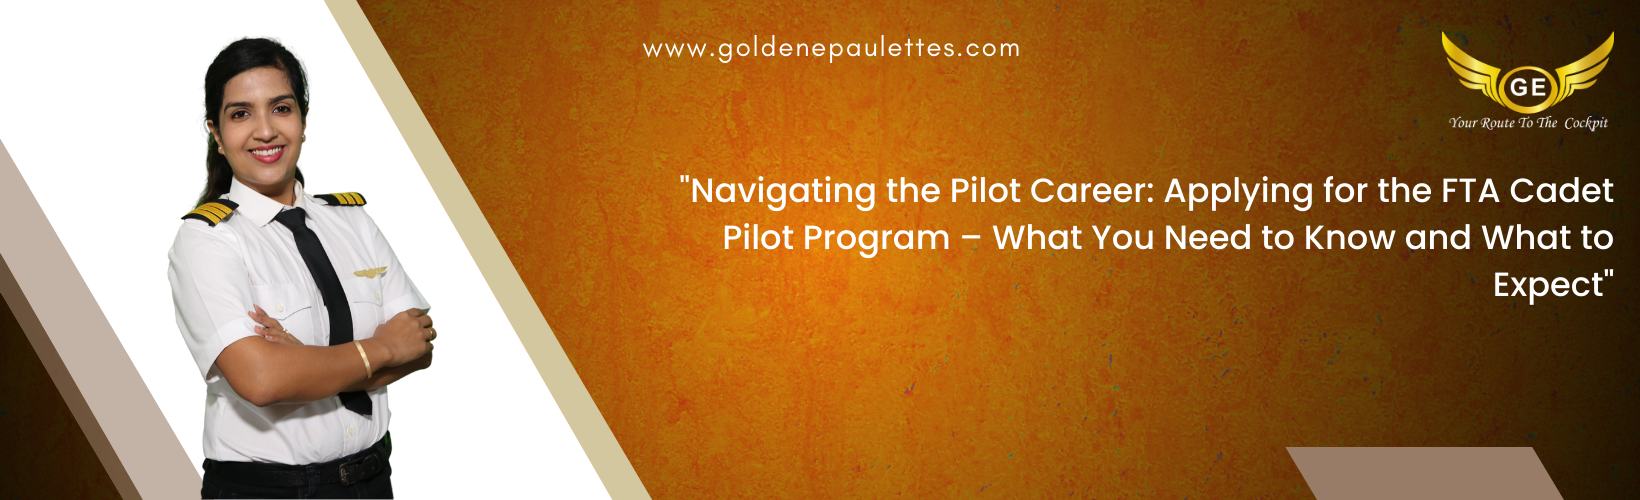 Navigating the Process of Applying for the FTA Cadet Pilot Program